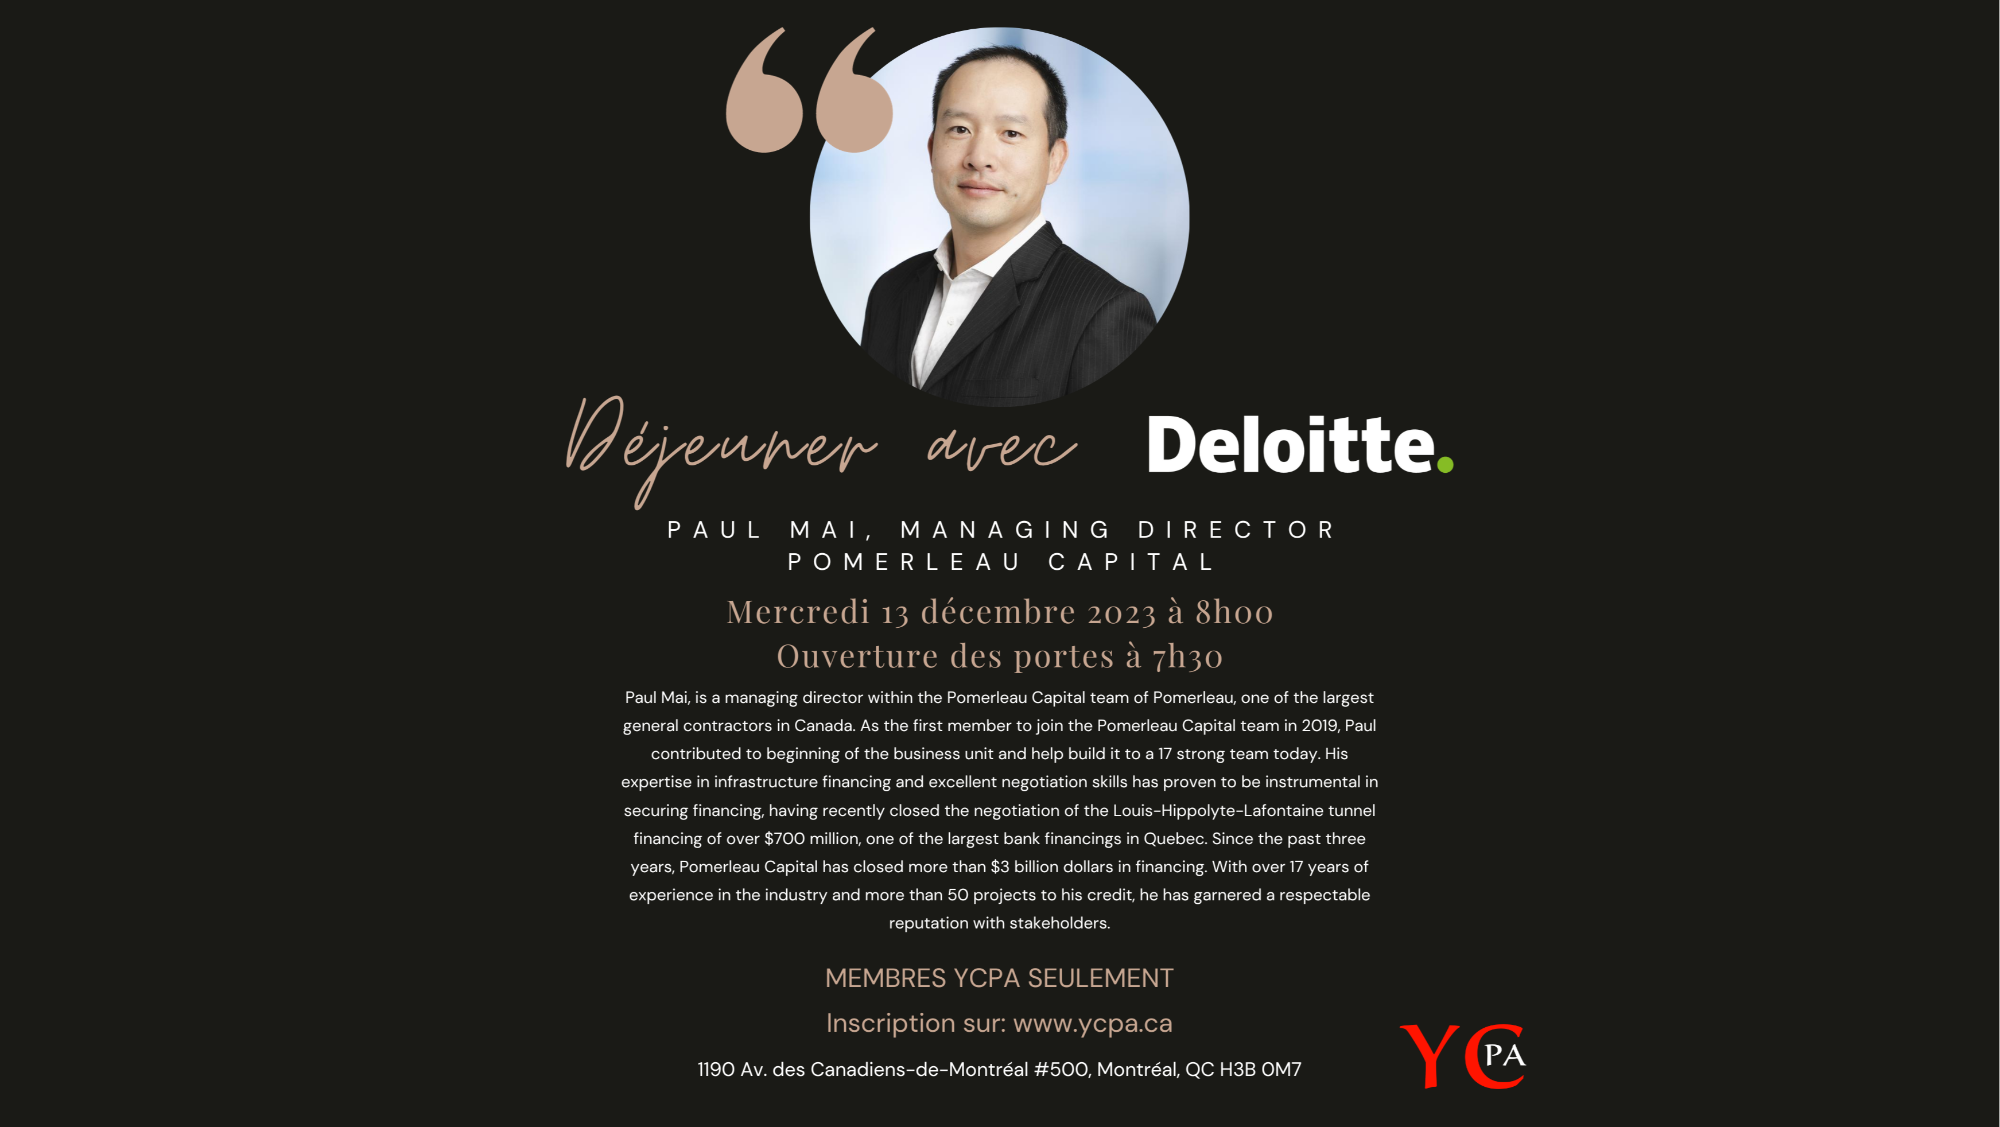 Breakfast with Deloitte - Paul Mai, Managing Director at Pomerleau Capital